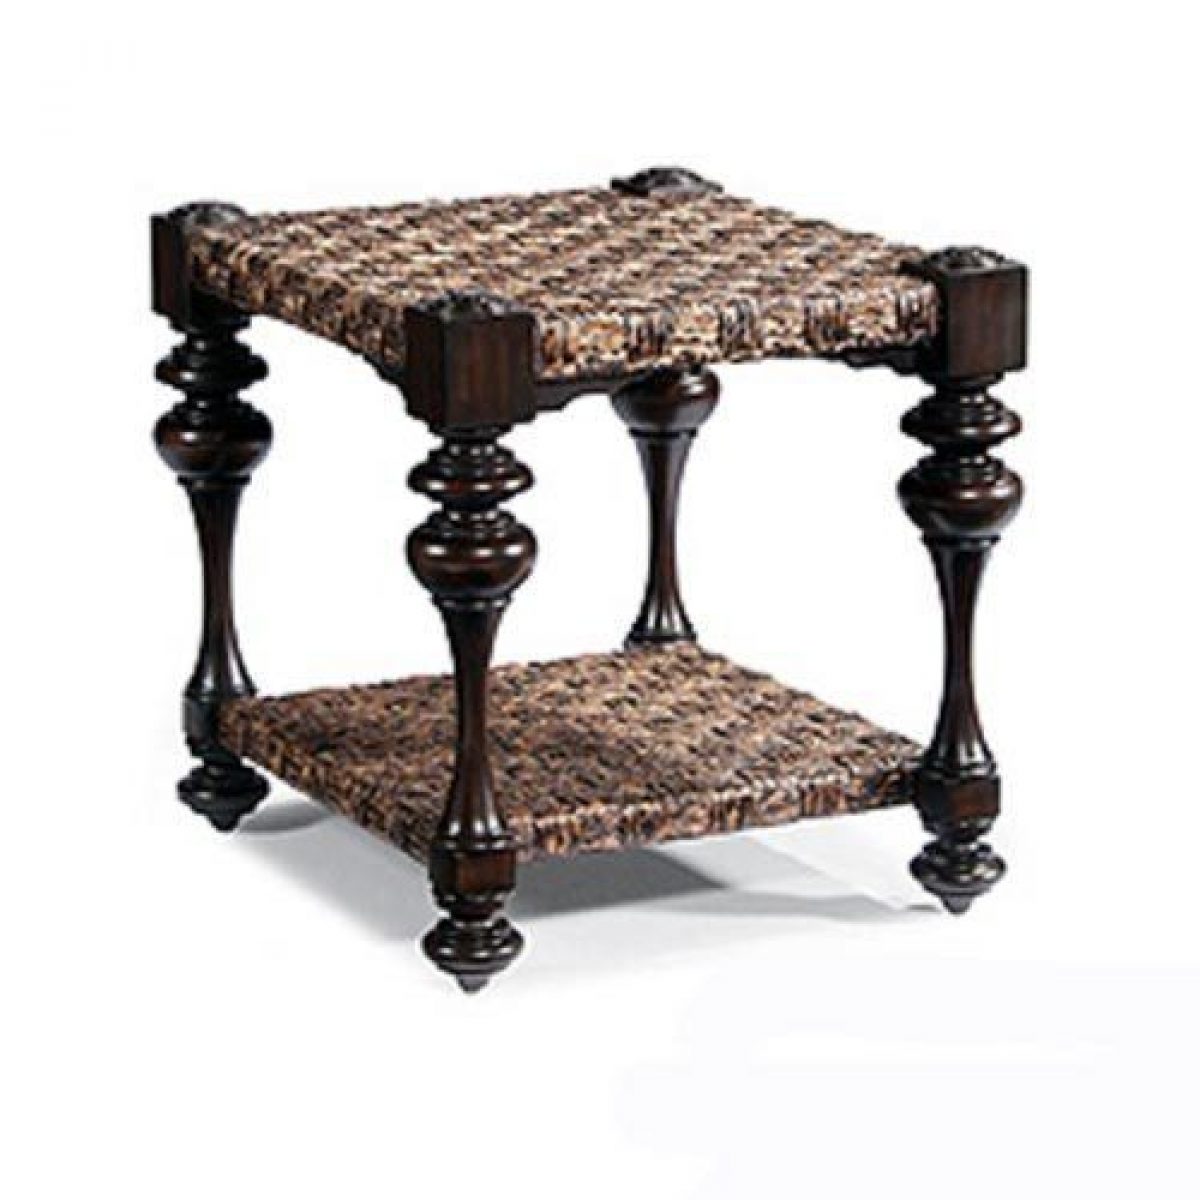 Bernhardt Bali End Table By Bernhardt Furniture Company 534 99